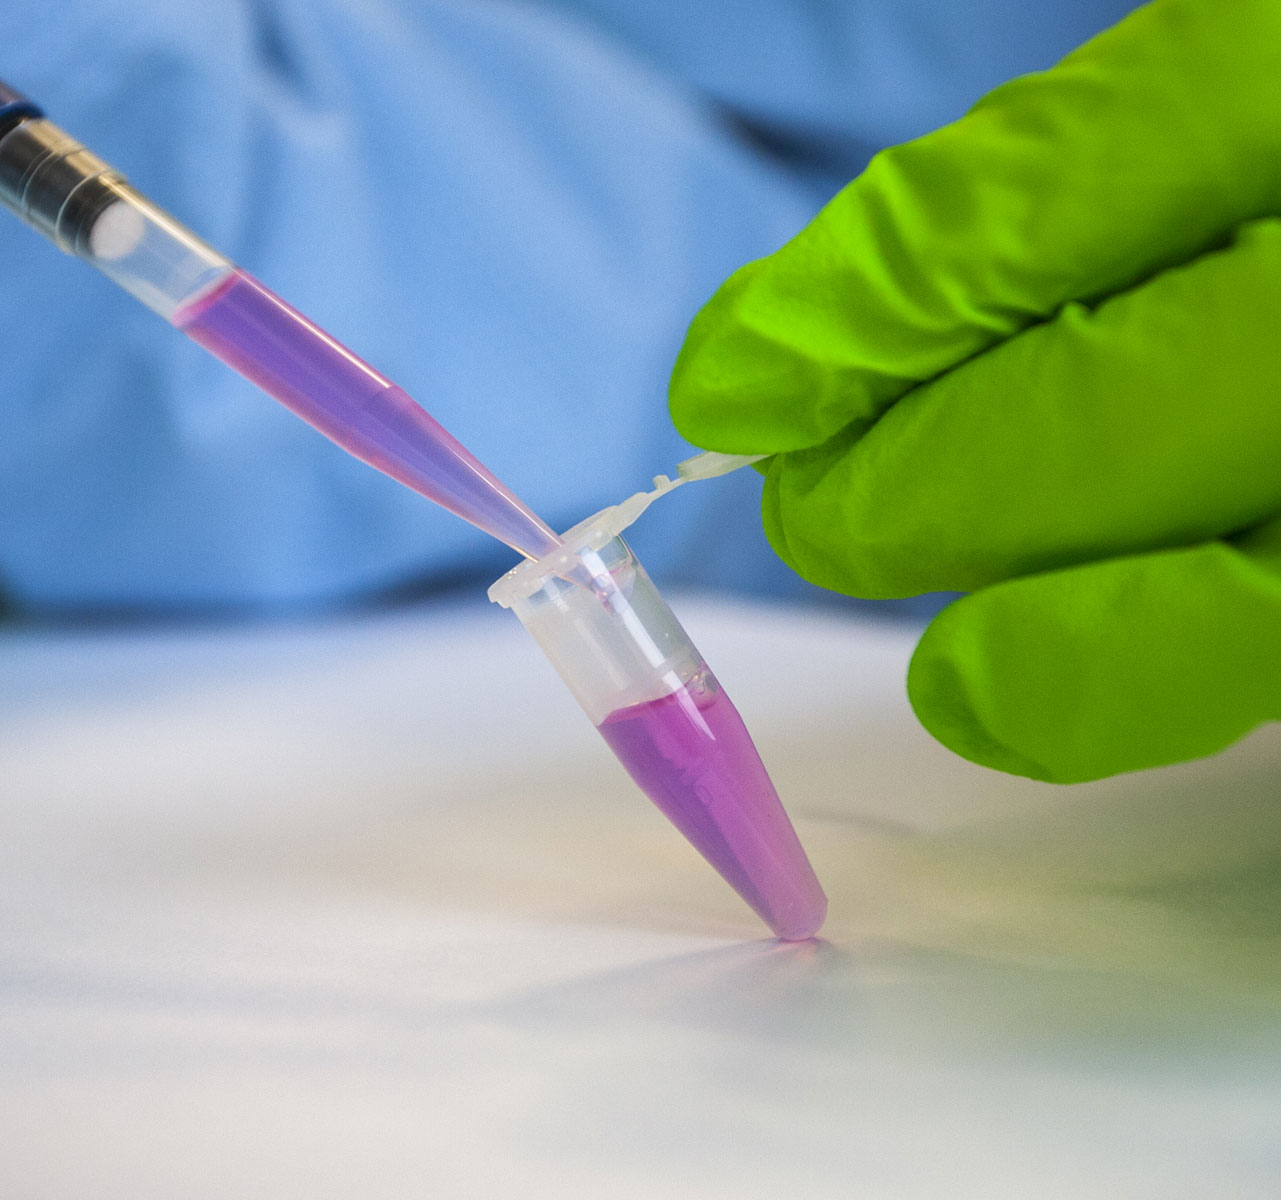 Research not involving animal testing | BPRC